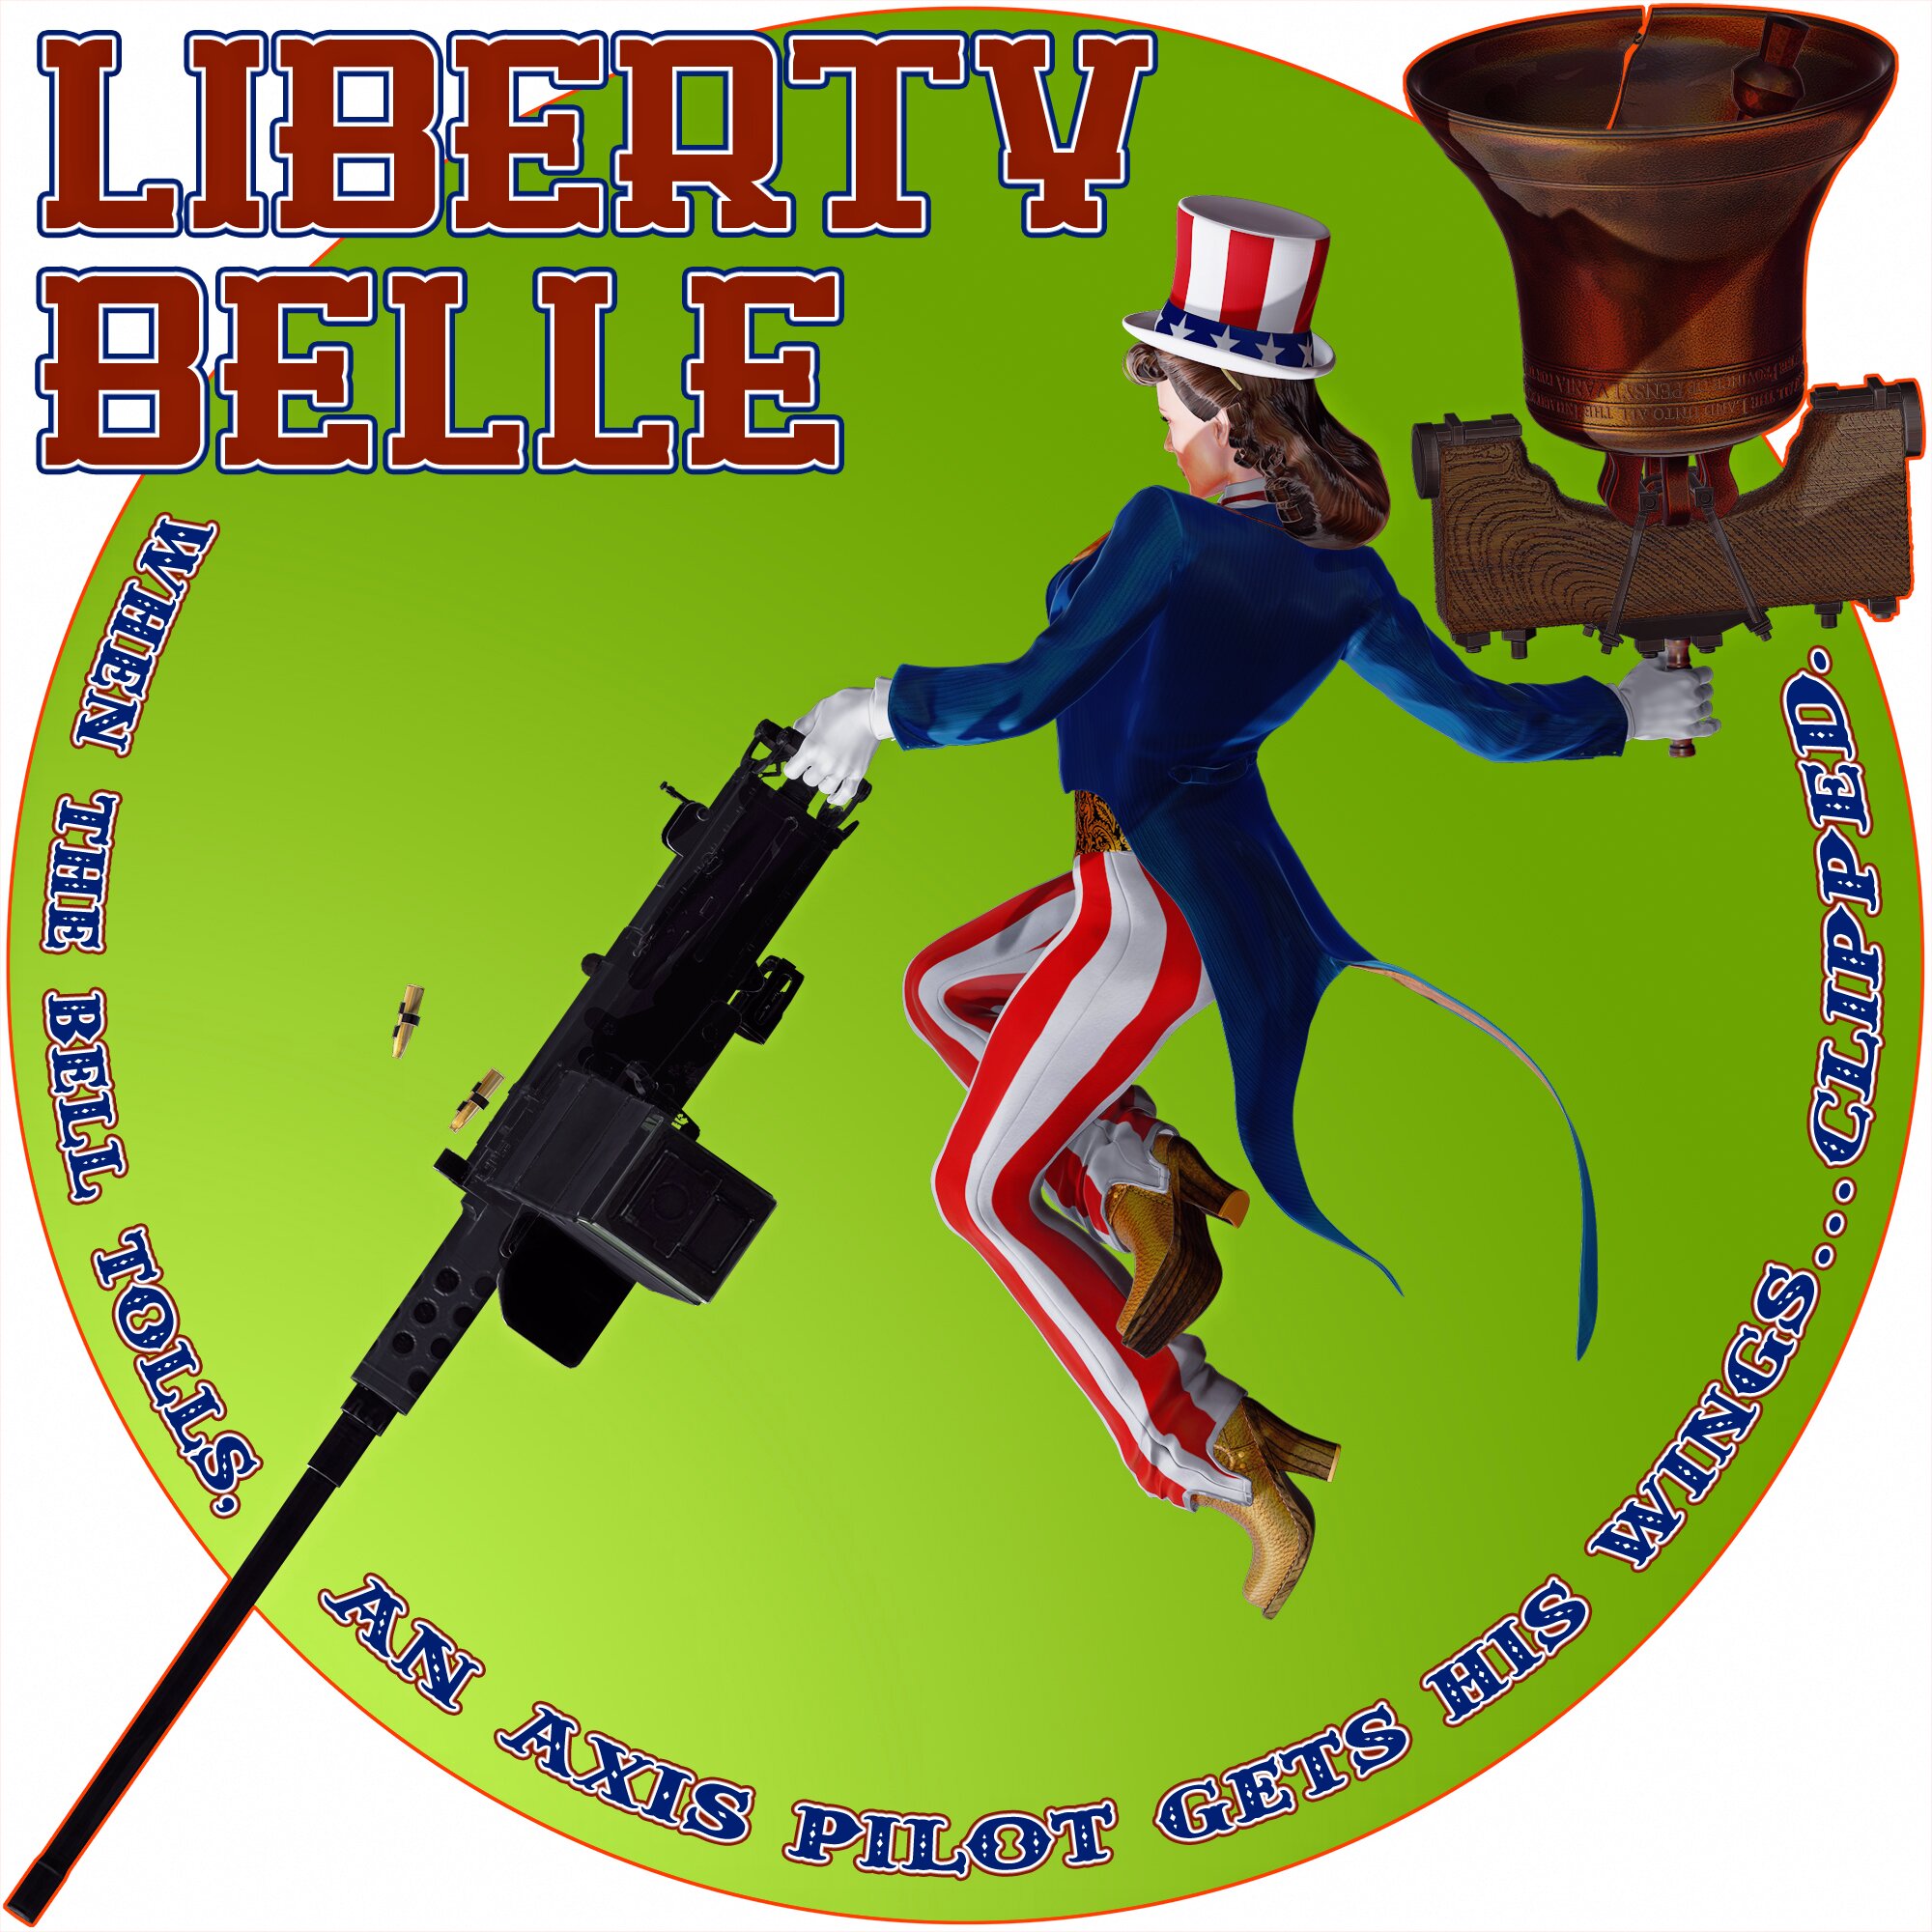 LibertyBelle10x10back_proc.jpg